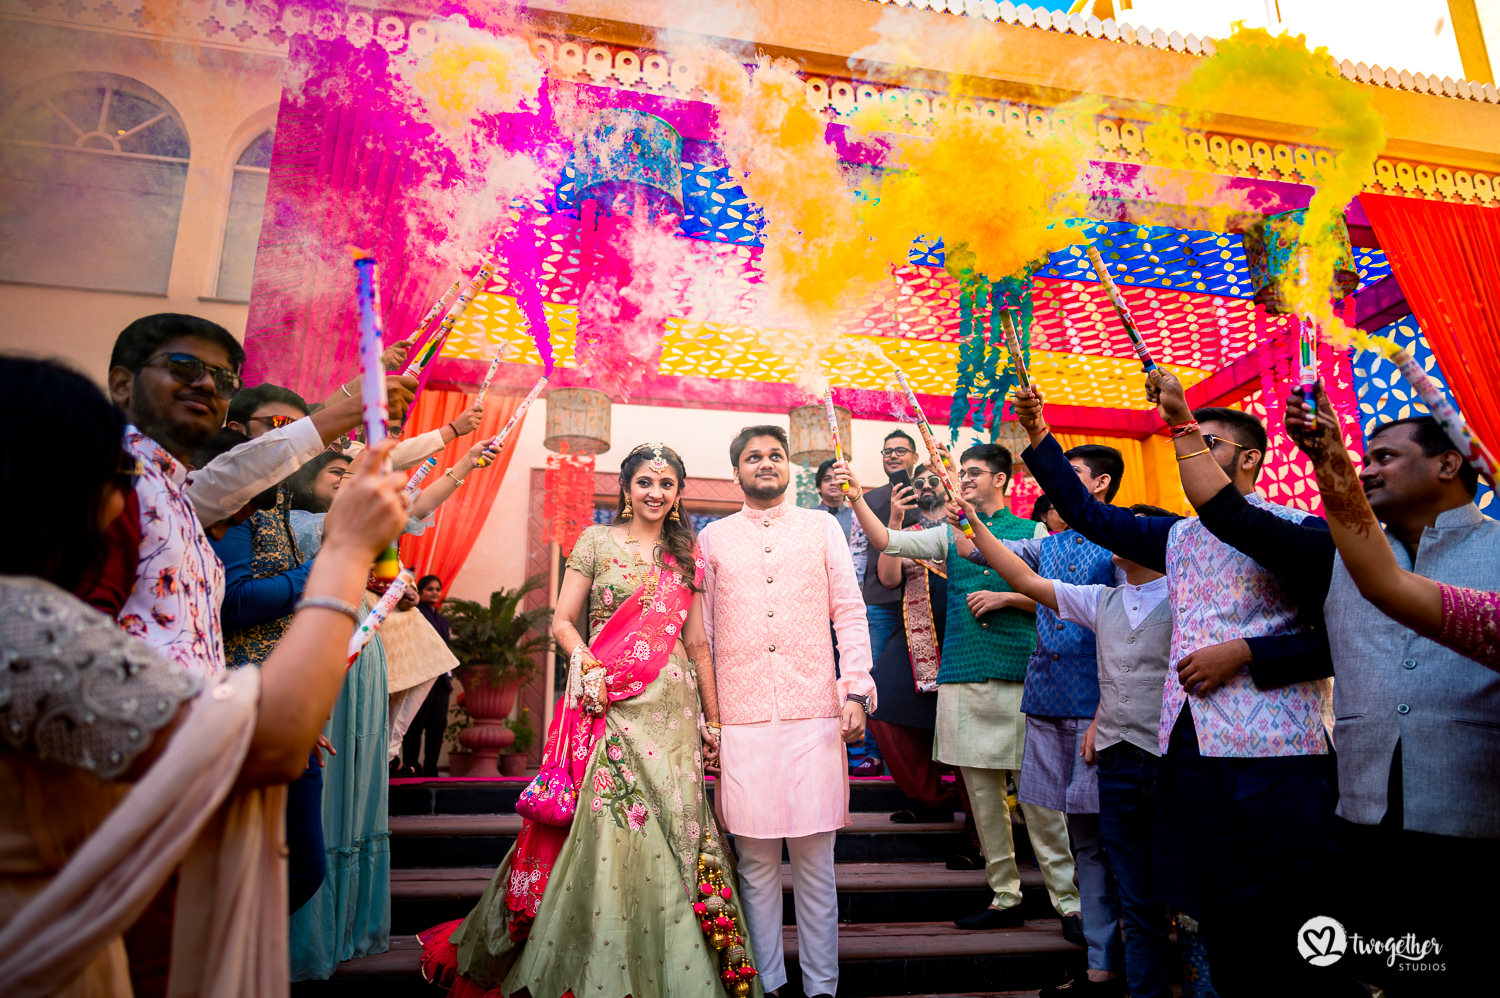 Couple entry in Jaipur destination wedding.